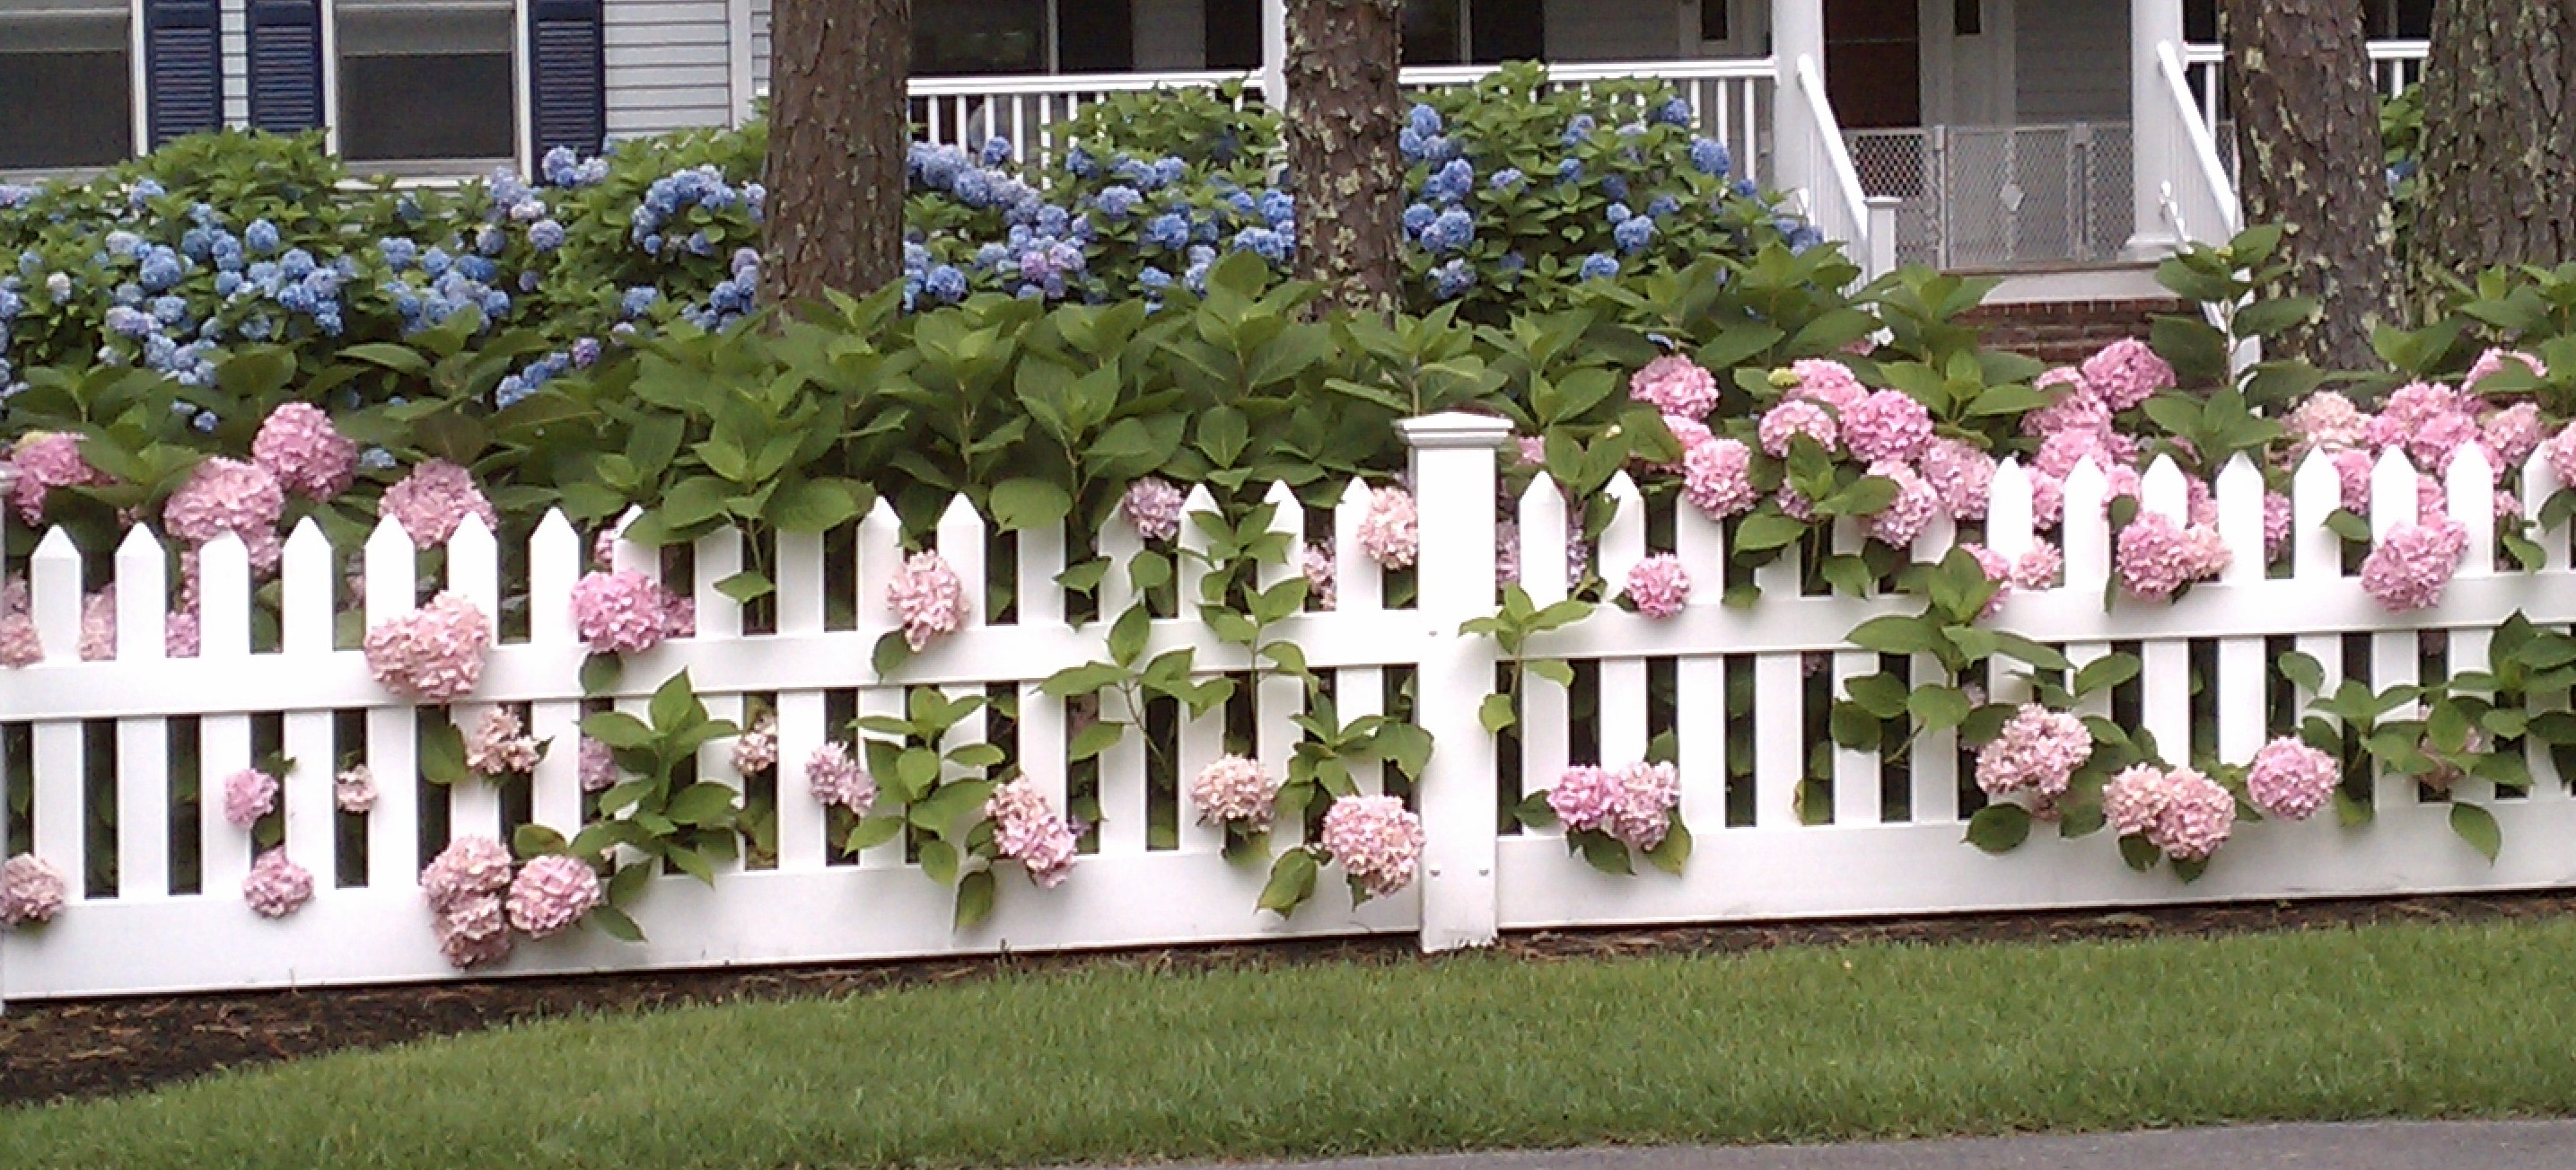 new garden ideas Hydrangeas with White Picket Fence | 2870 x 1303